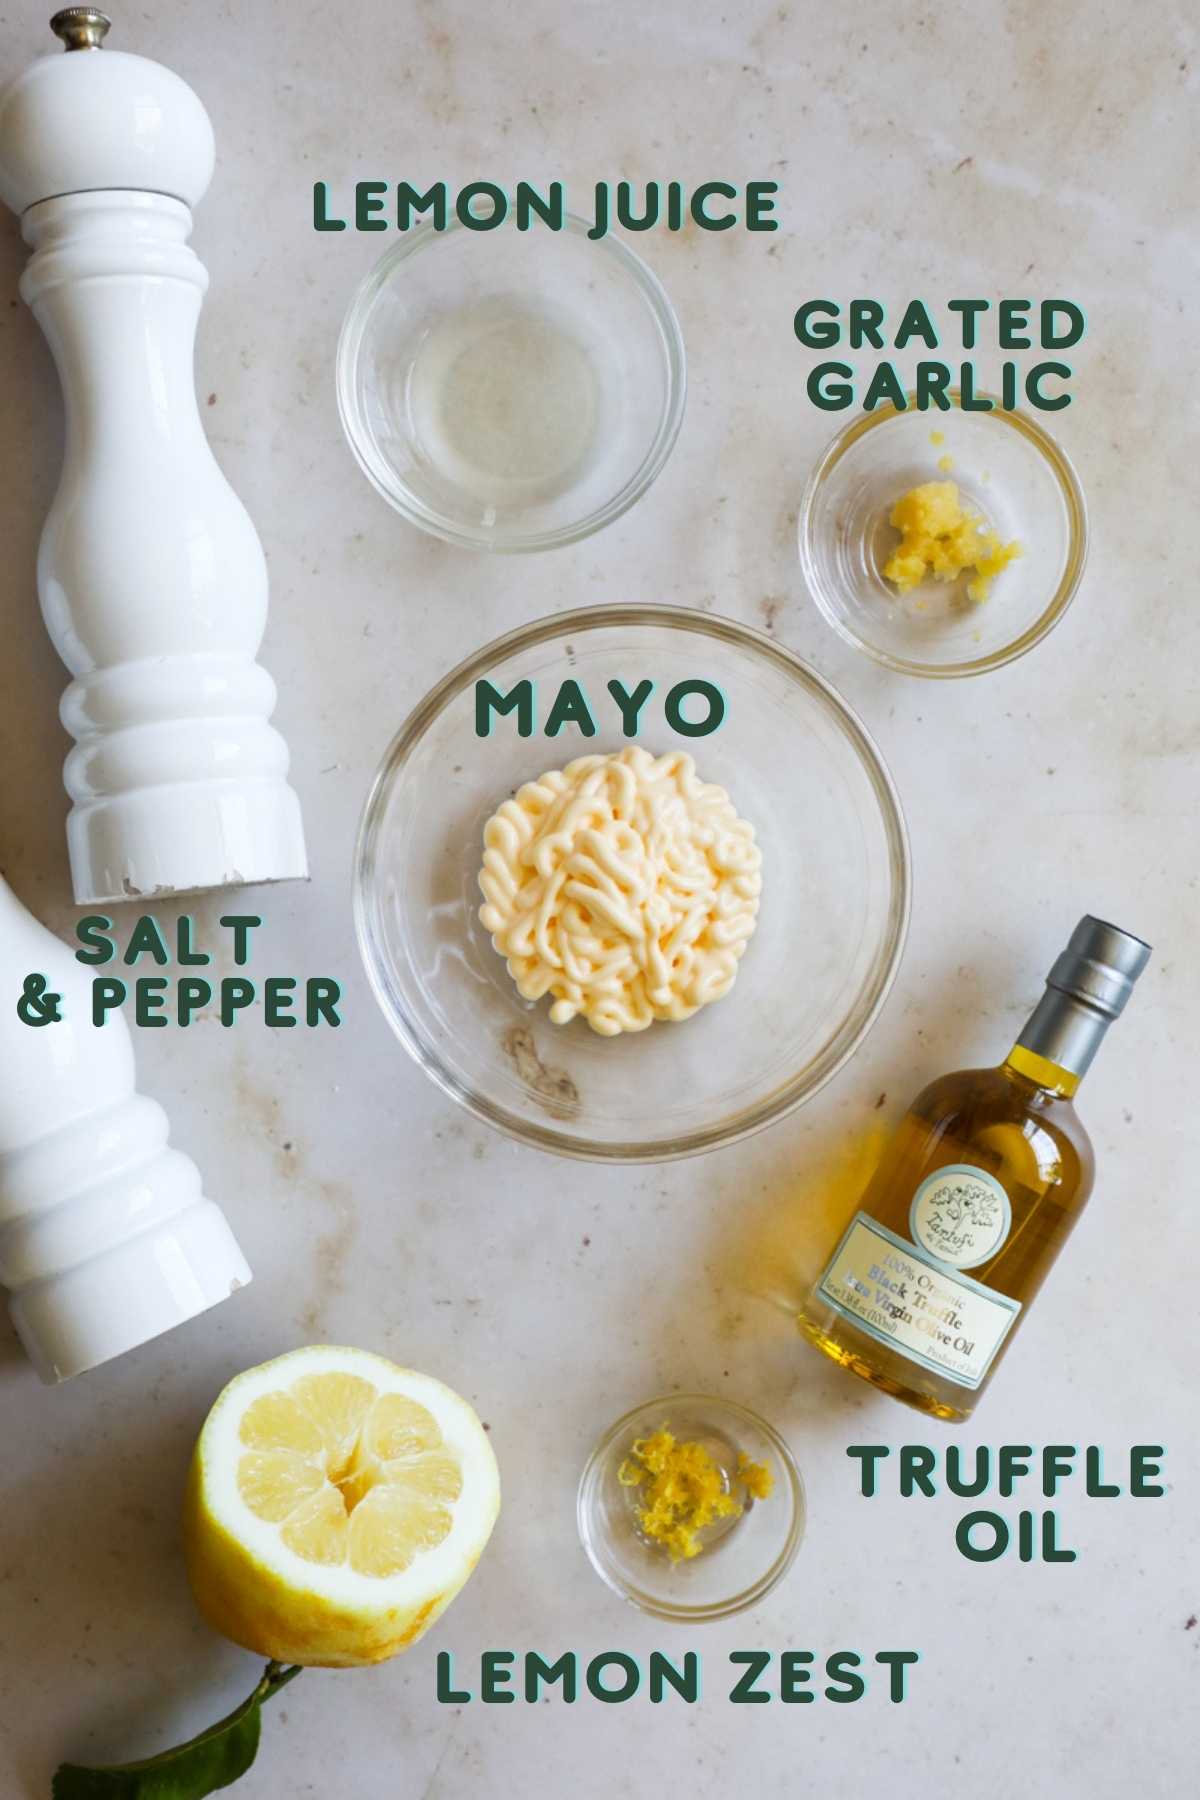 Ingredients to make garlic truffle mayo aioli.